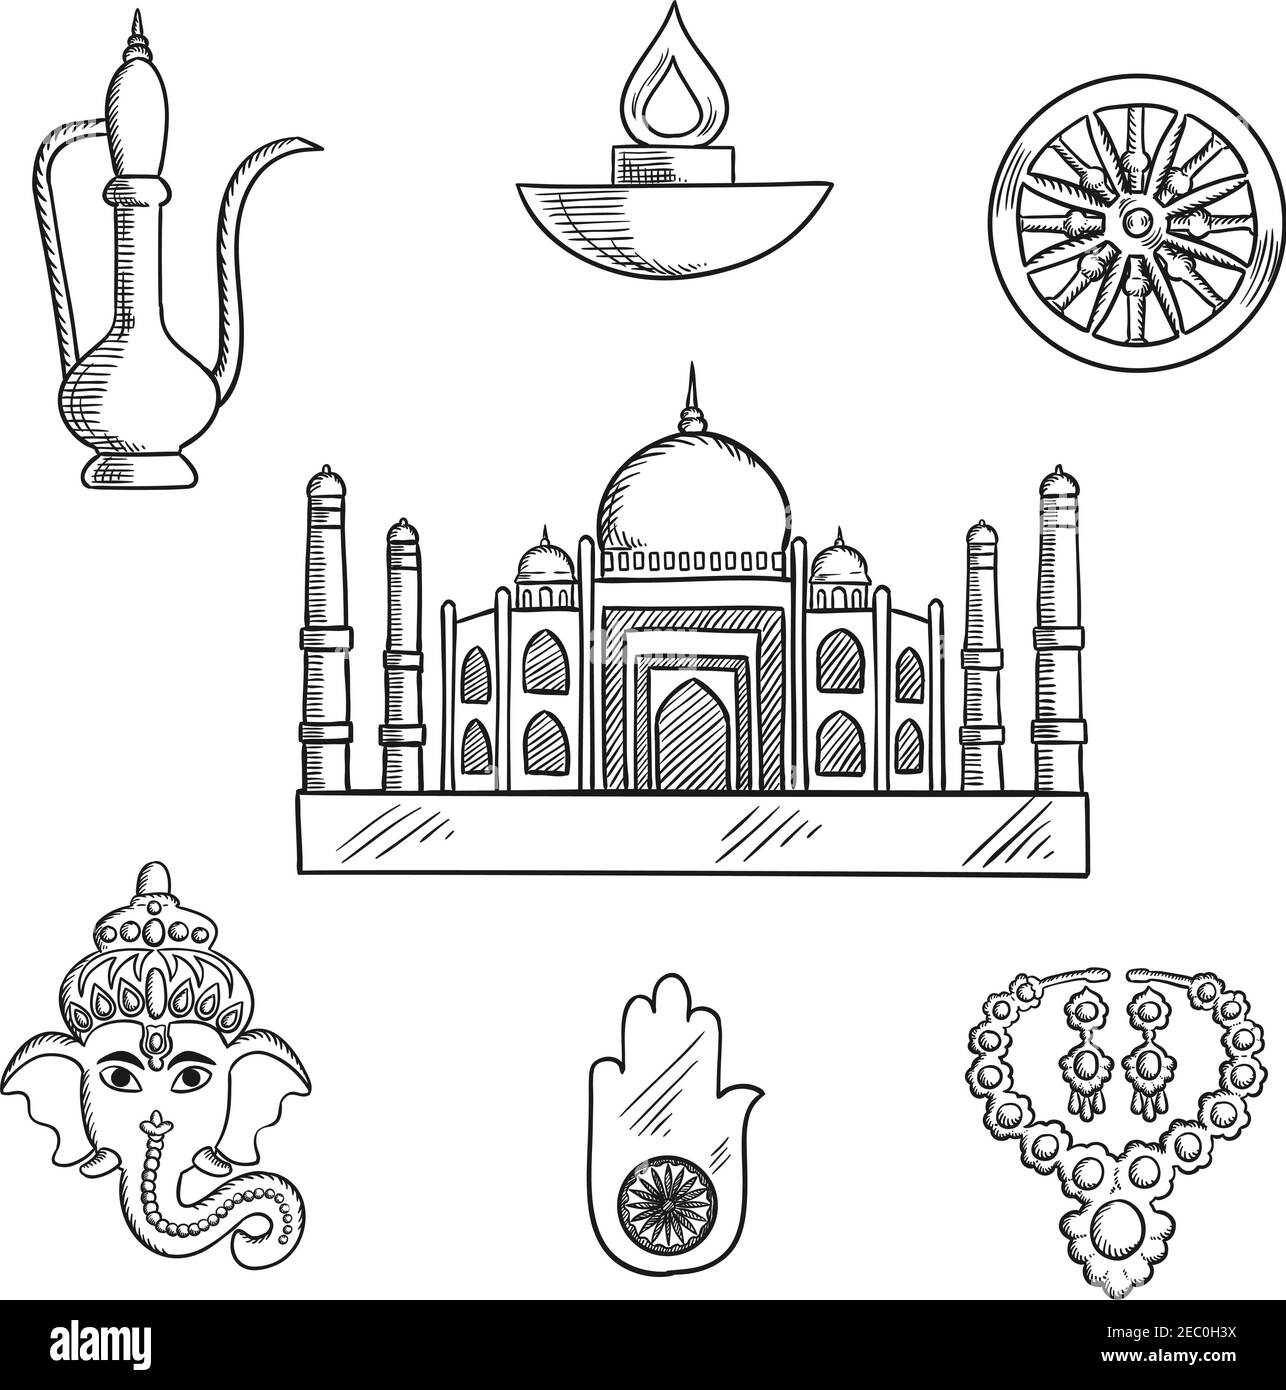 Indian religion and culture symbols with Ganesha God and element ashoka Chakra wheel, hamsa hand amulet and brass teapot, ethnic jewelry, Diwali lamp Stock Vector